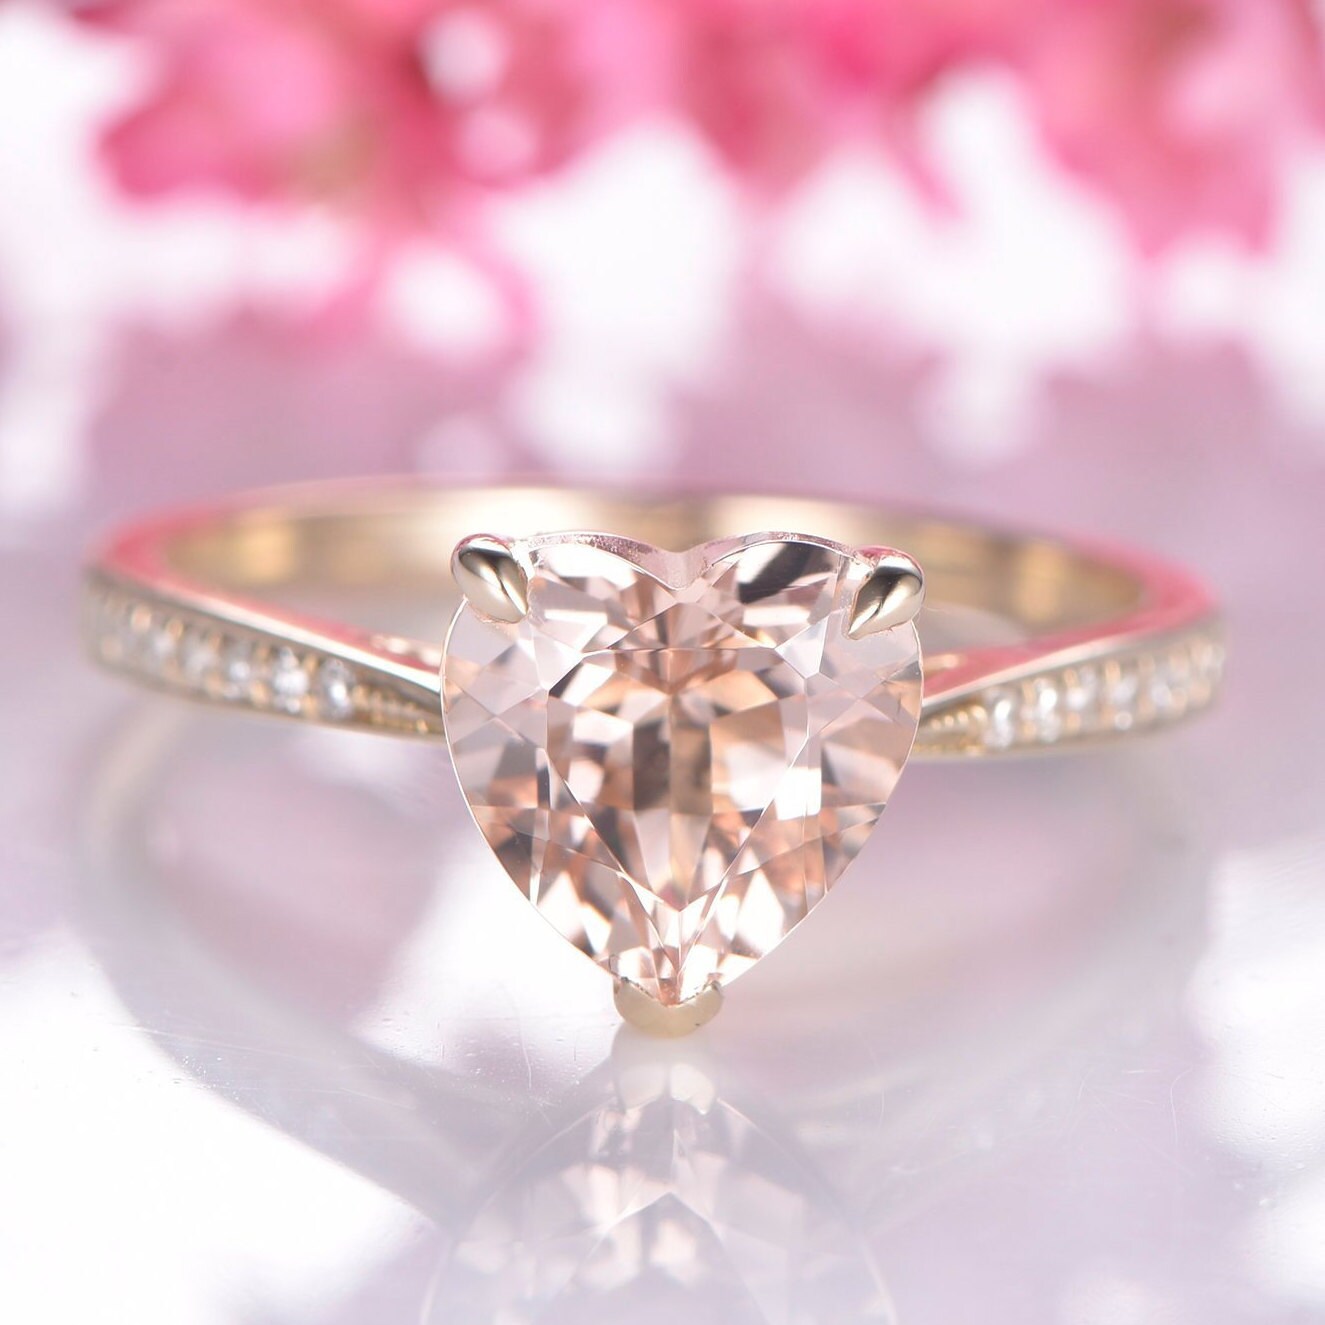 Heart shape morganite engagement ring 14k yellow gold 8mm natural pink morganite bridal ring diamond band channel setting custom ring